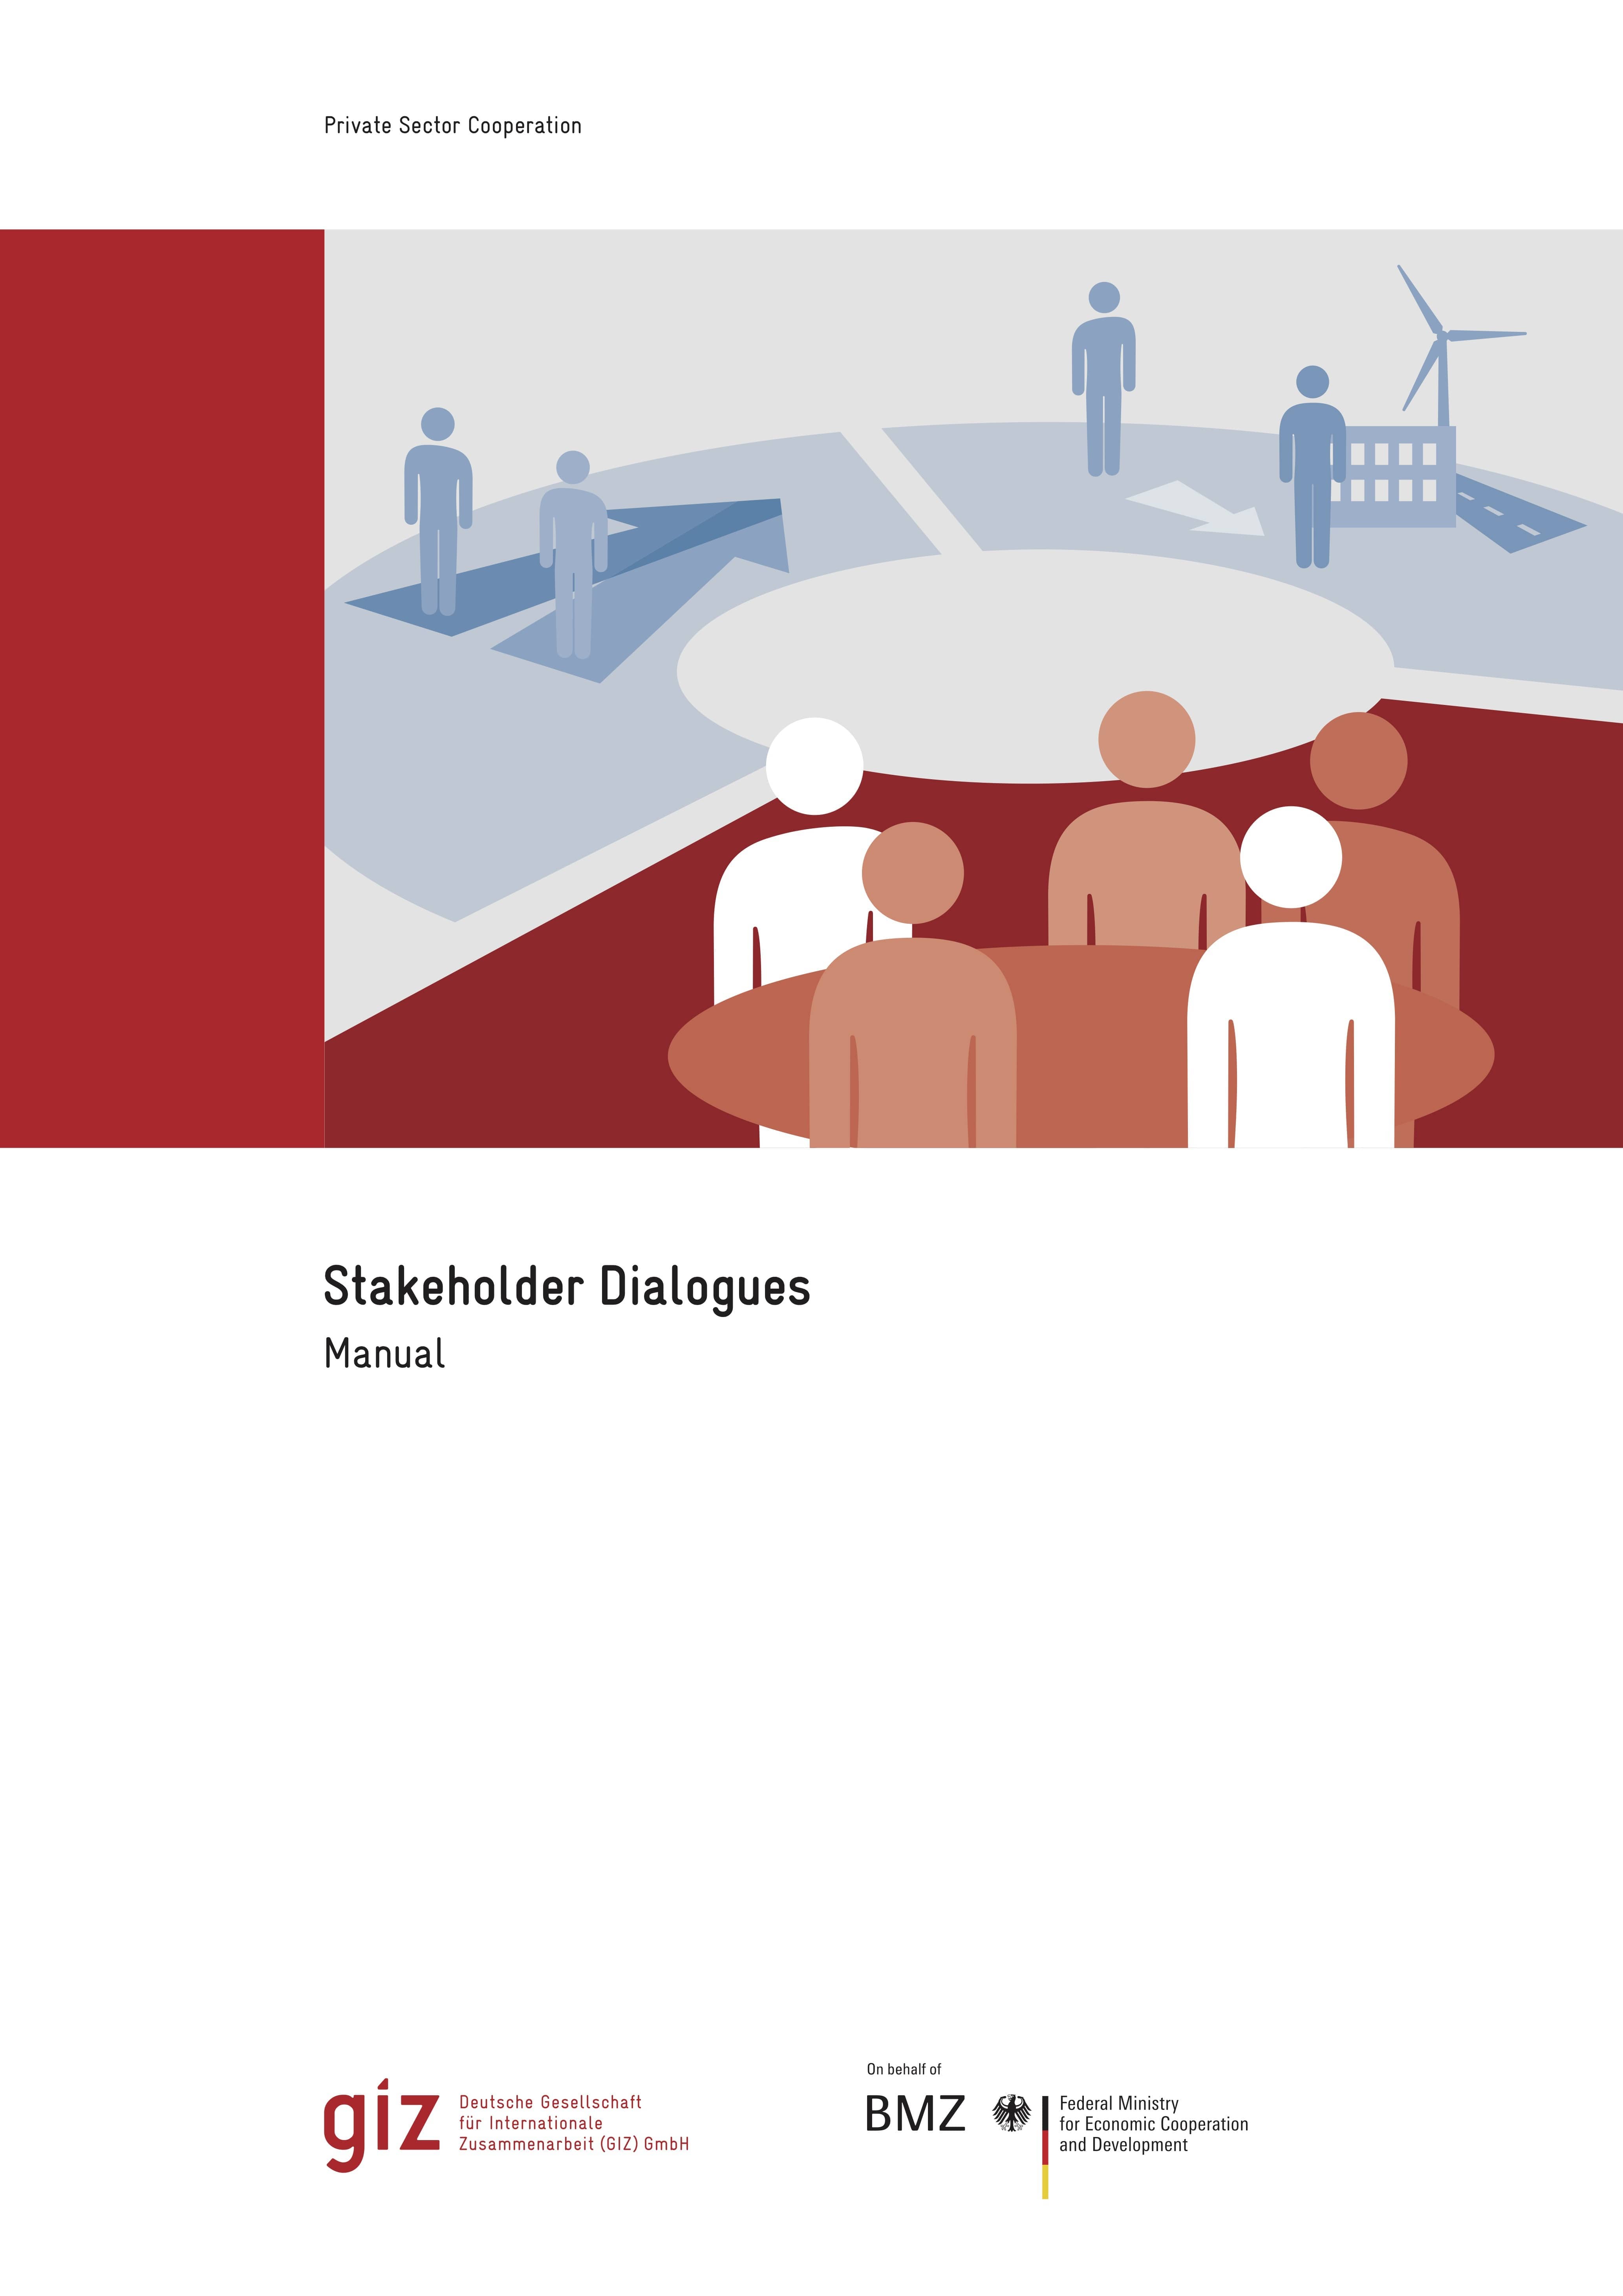 Stakeholder Dialogues Manual (GIZ and BMZ, 2011)